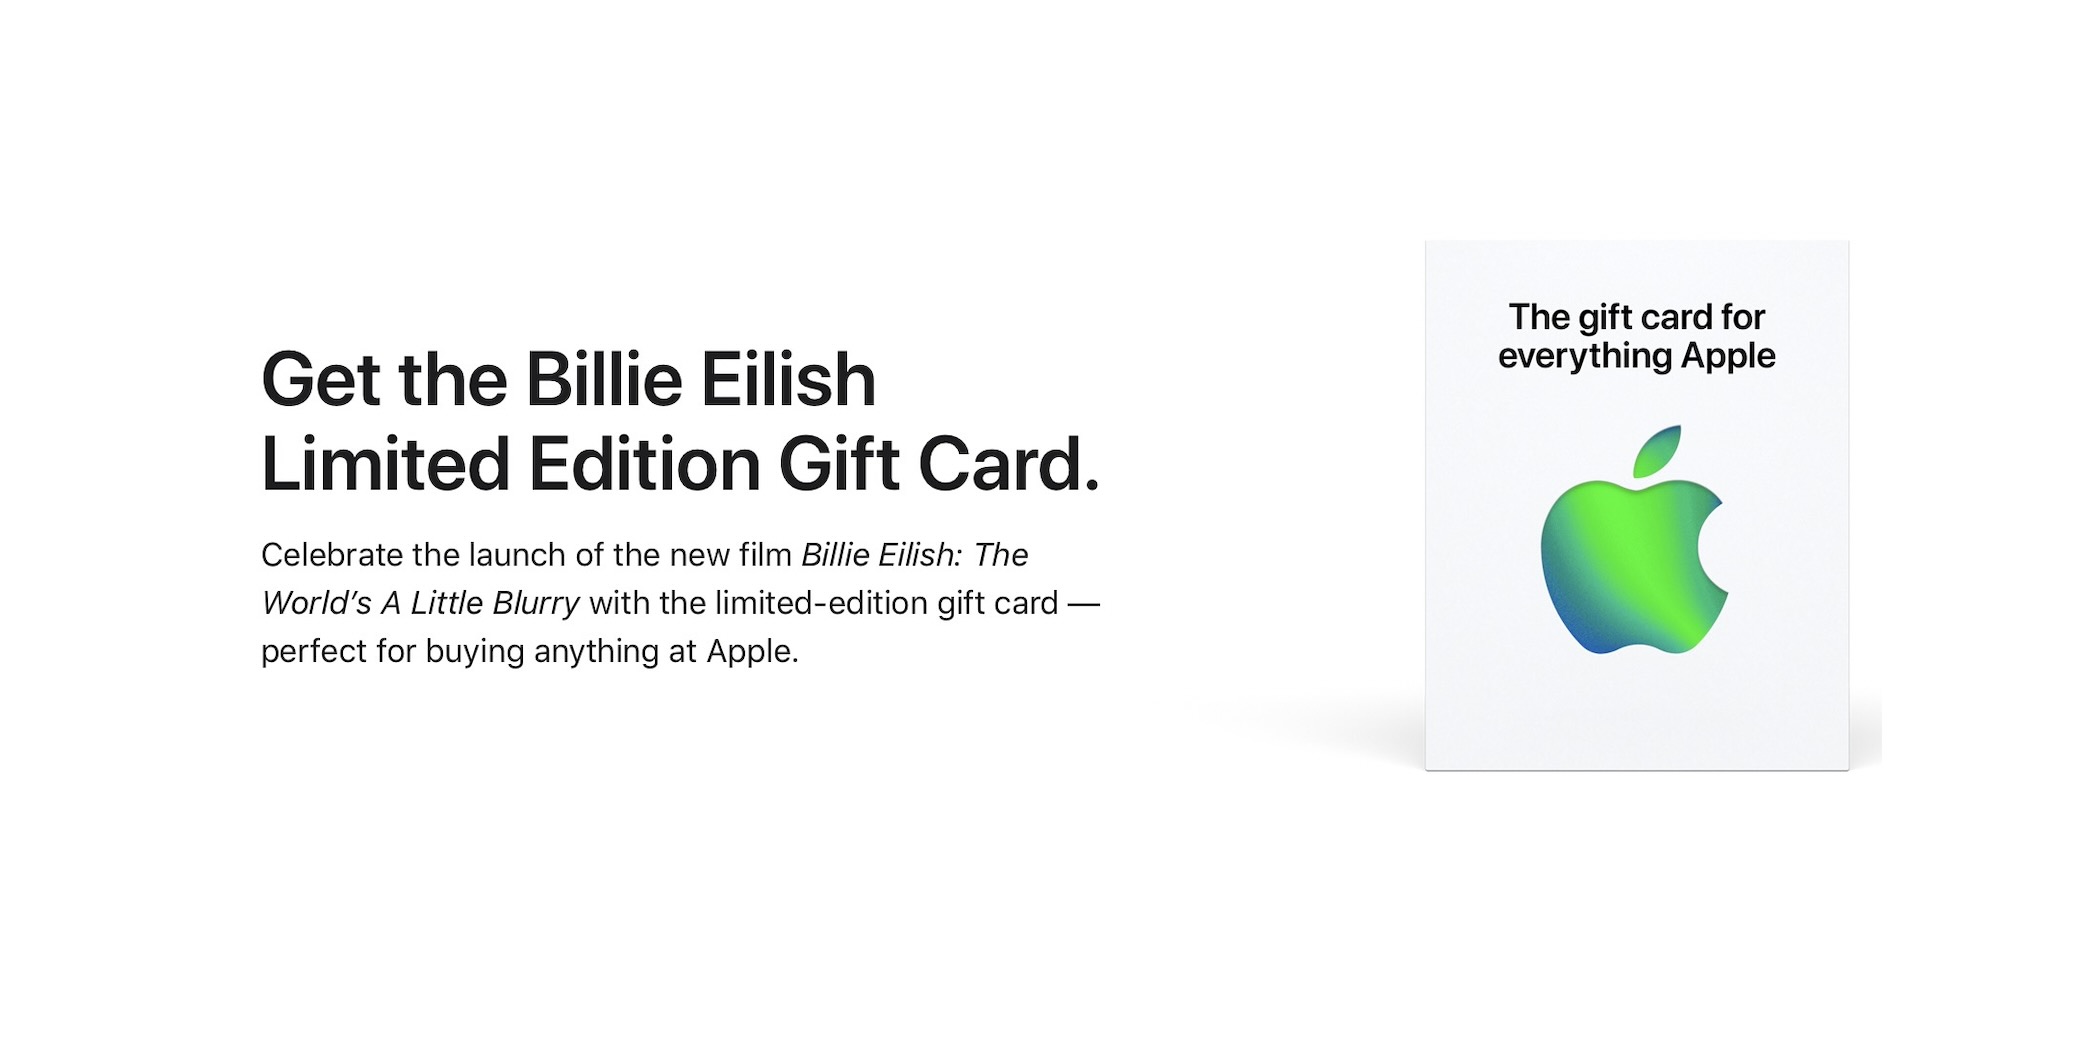 Billie Eilish Documentary Gets 2021 Release Date on Apple TV+